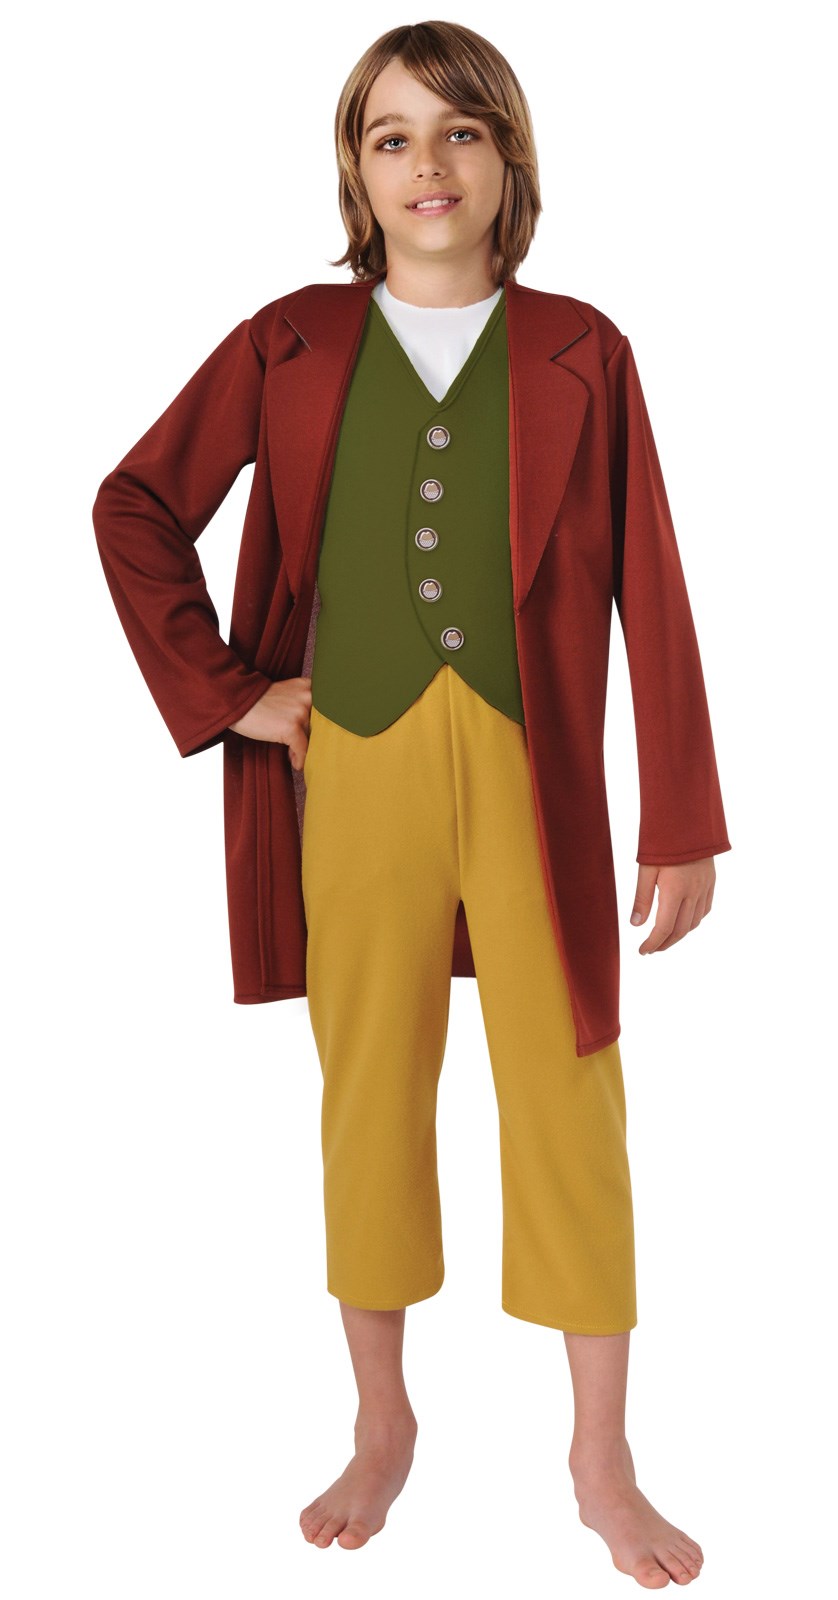 The Hobbit Bilbo Baggins Child Costume